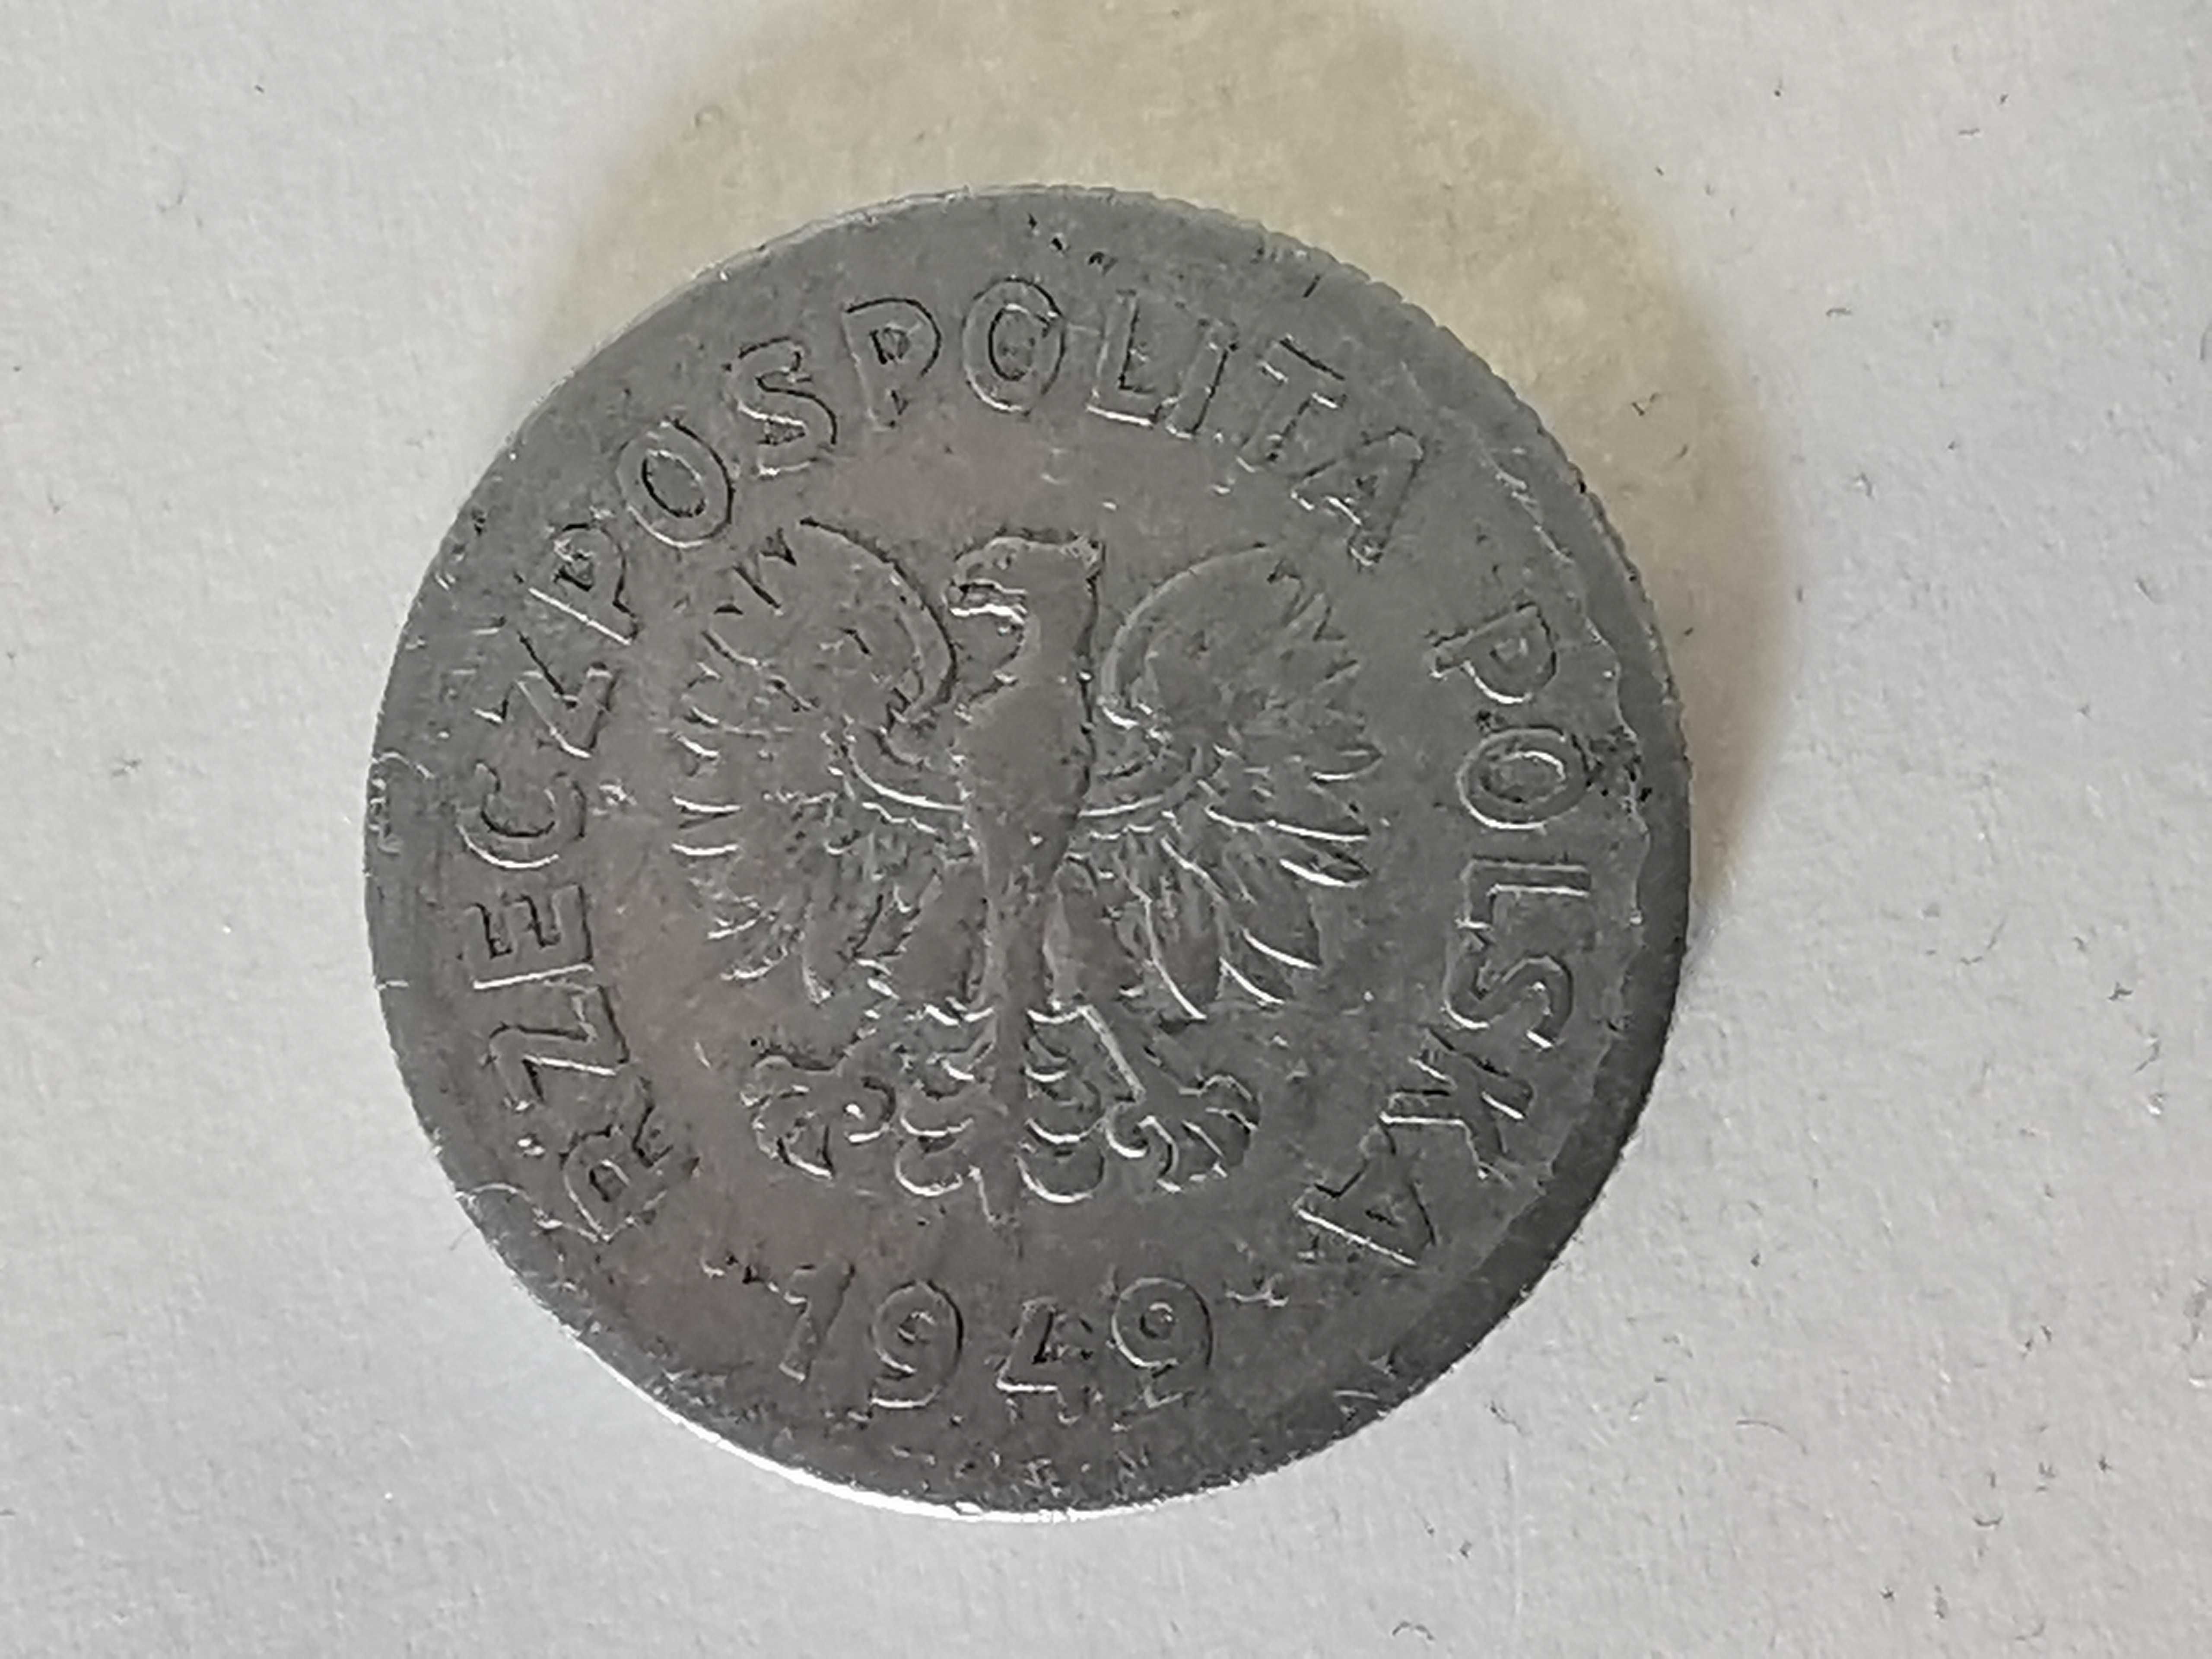 Moneta 1 zł 1949 r.